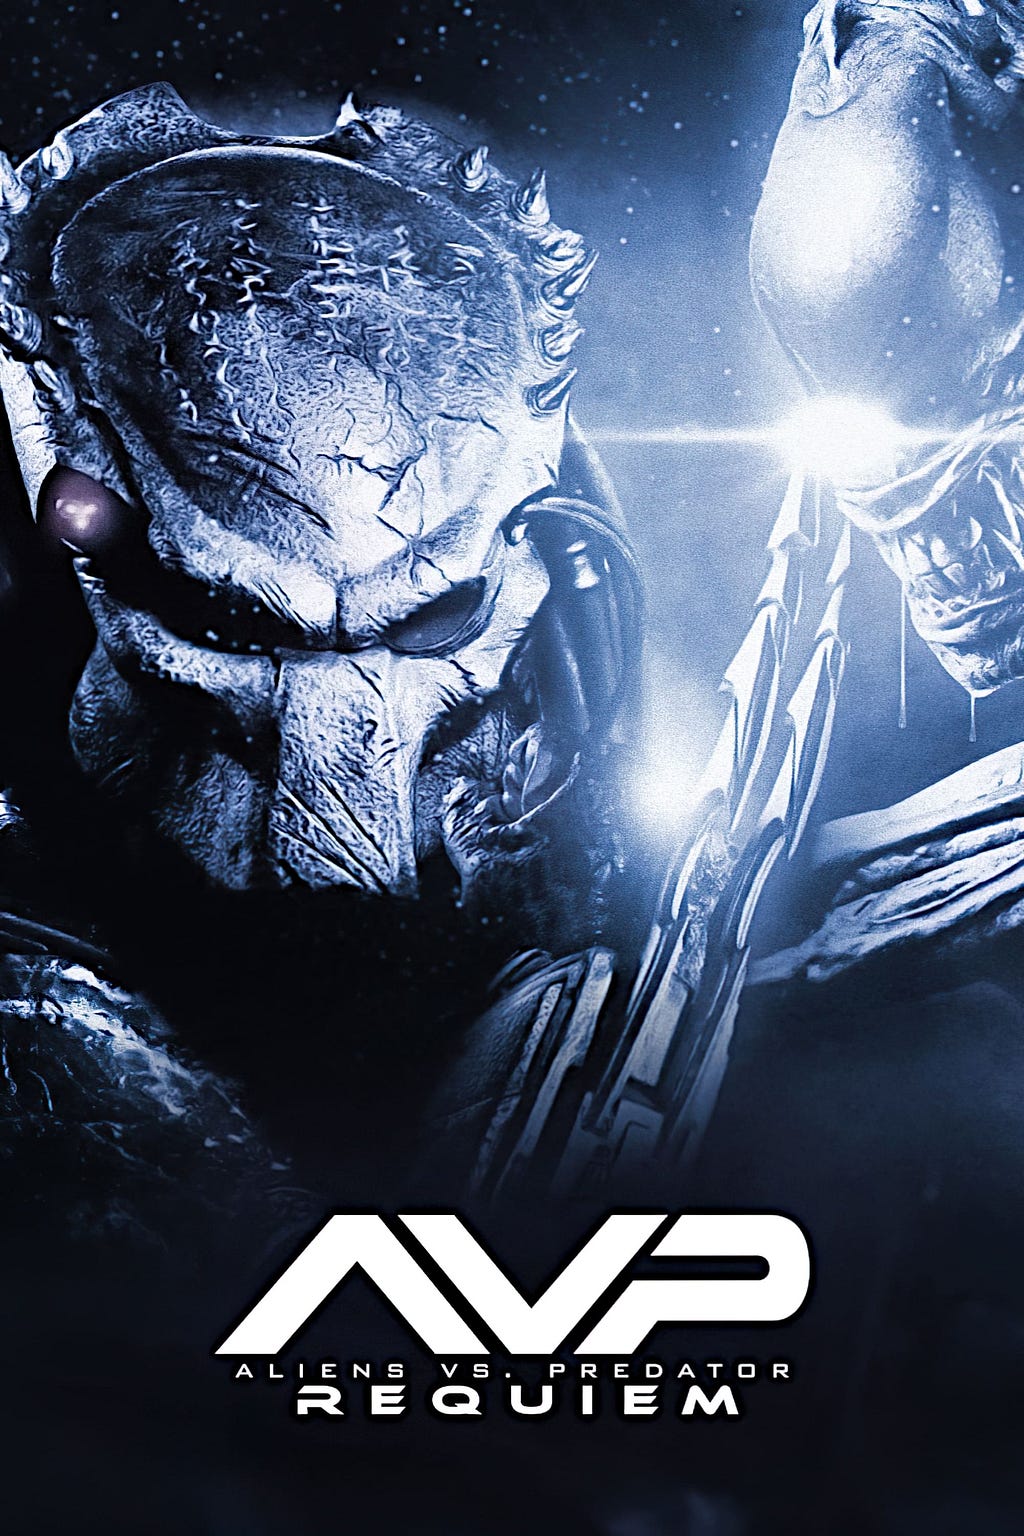 Aliens vs. Predator: Requiem (2007) | Poster